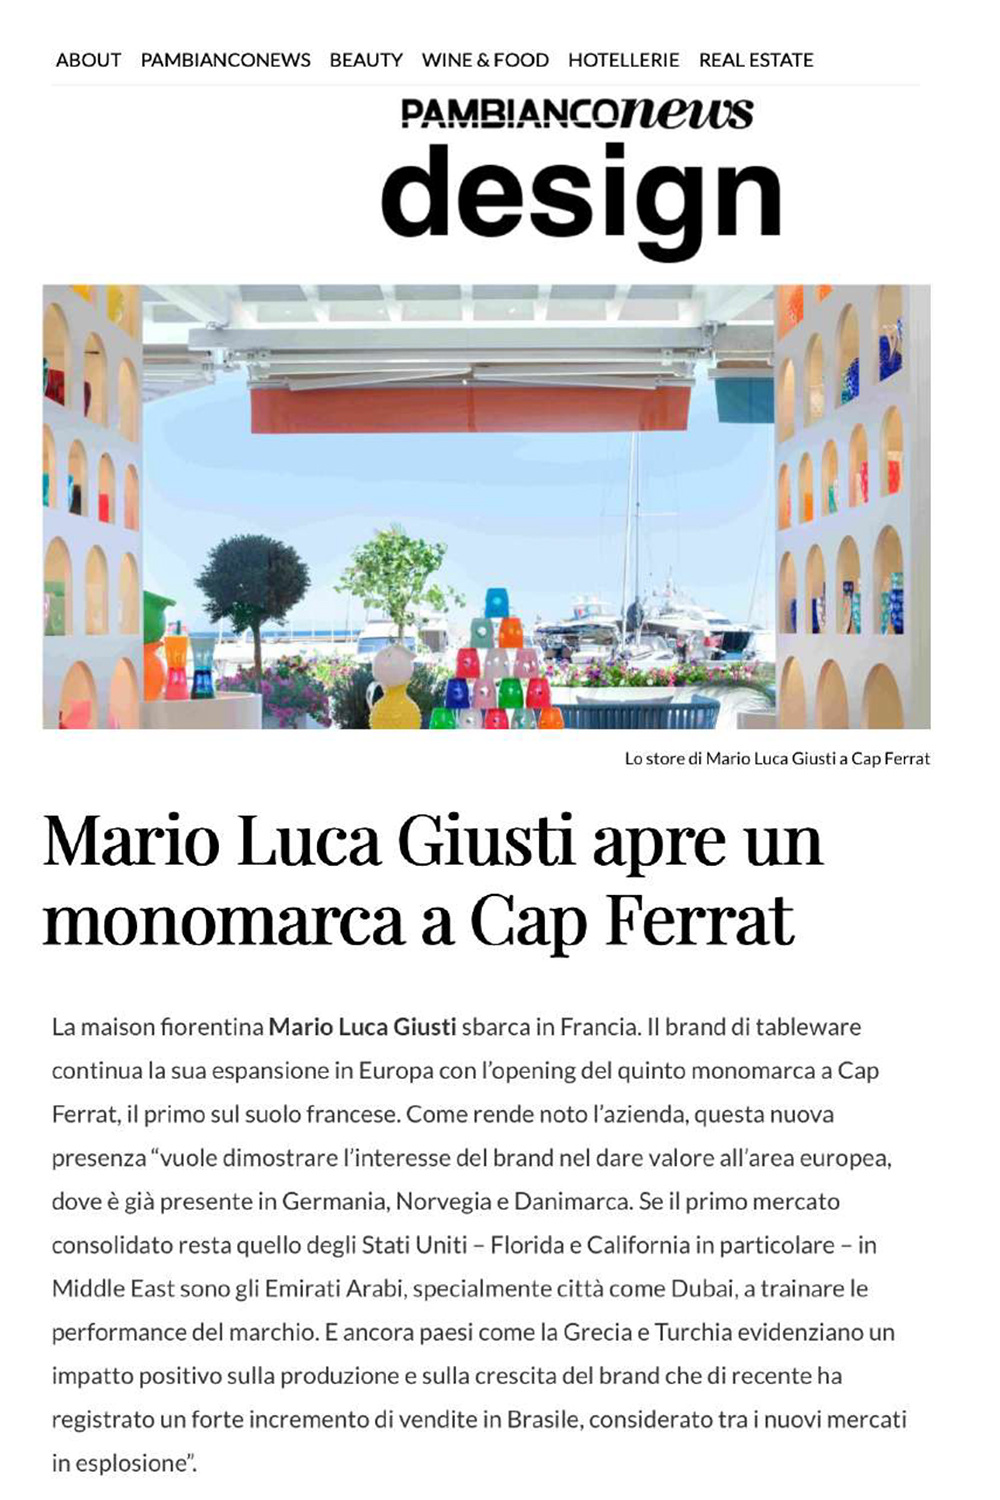 Mario Luca Giusi Apre un Monomarca a Cap Ferrat